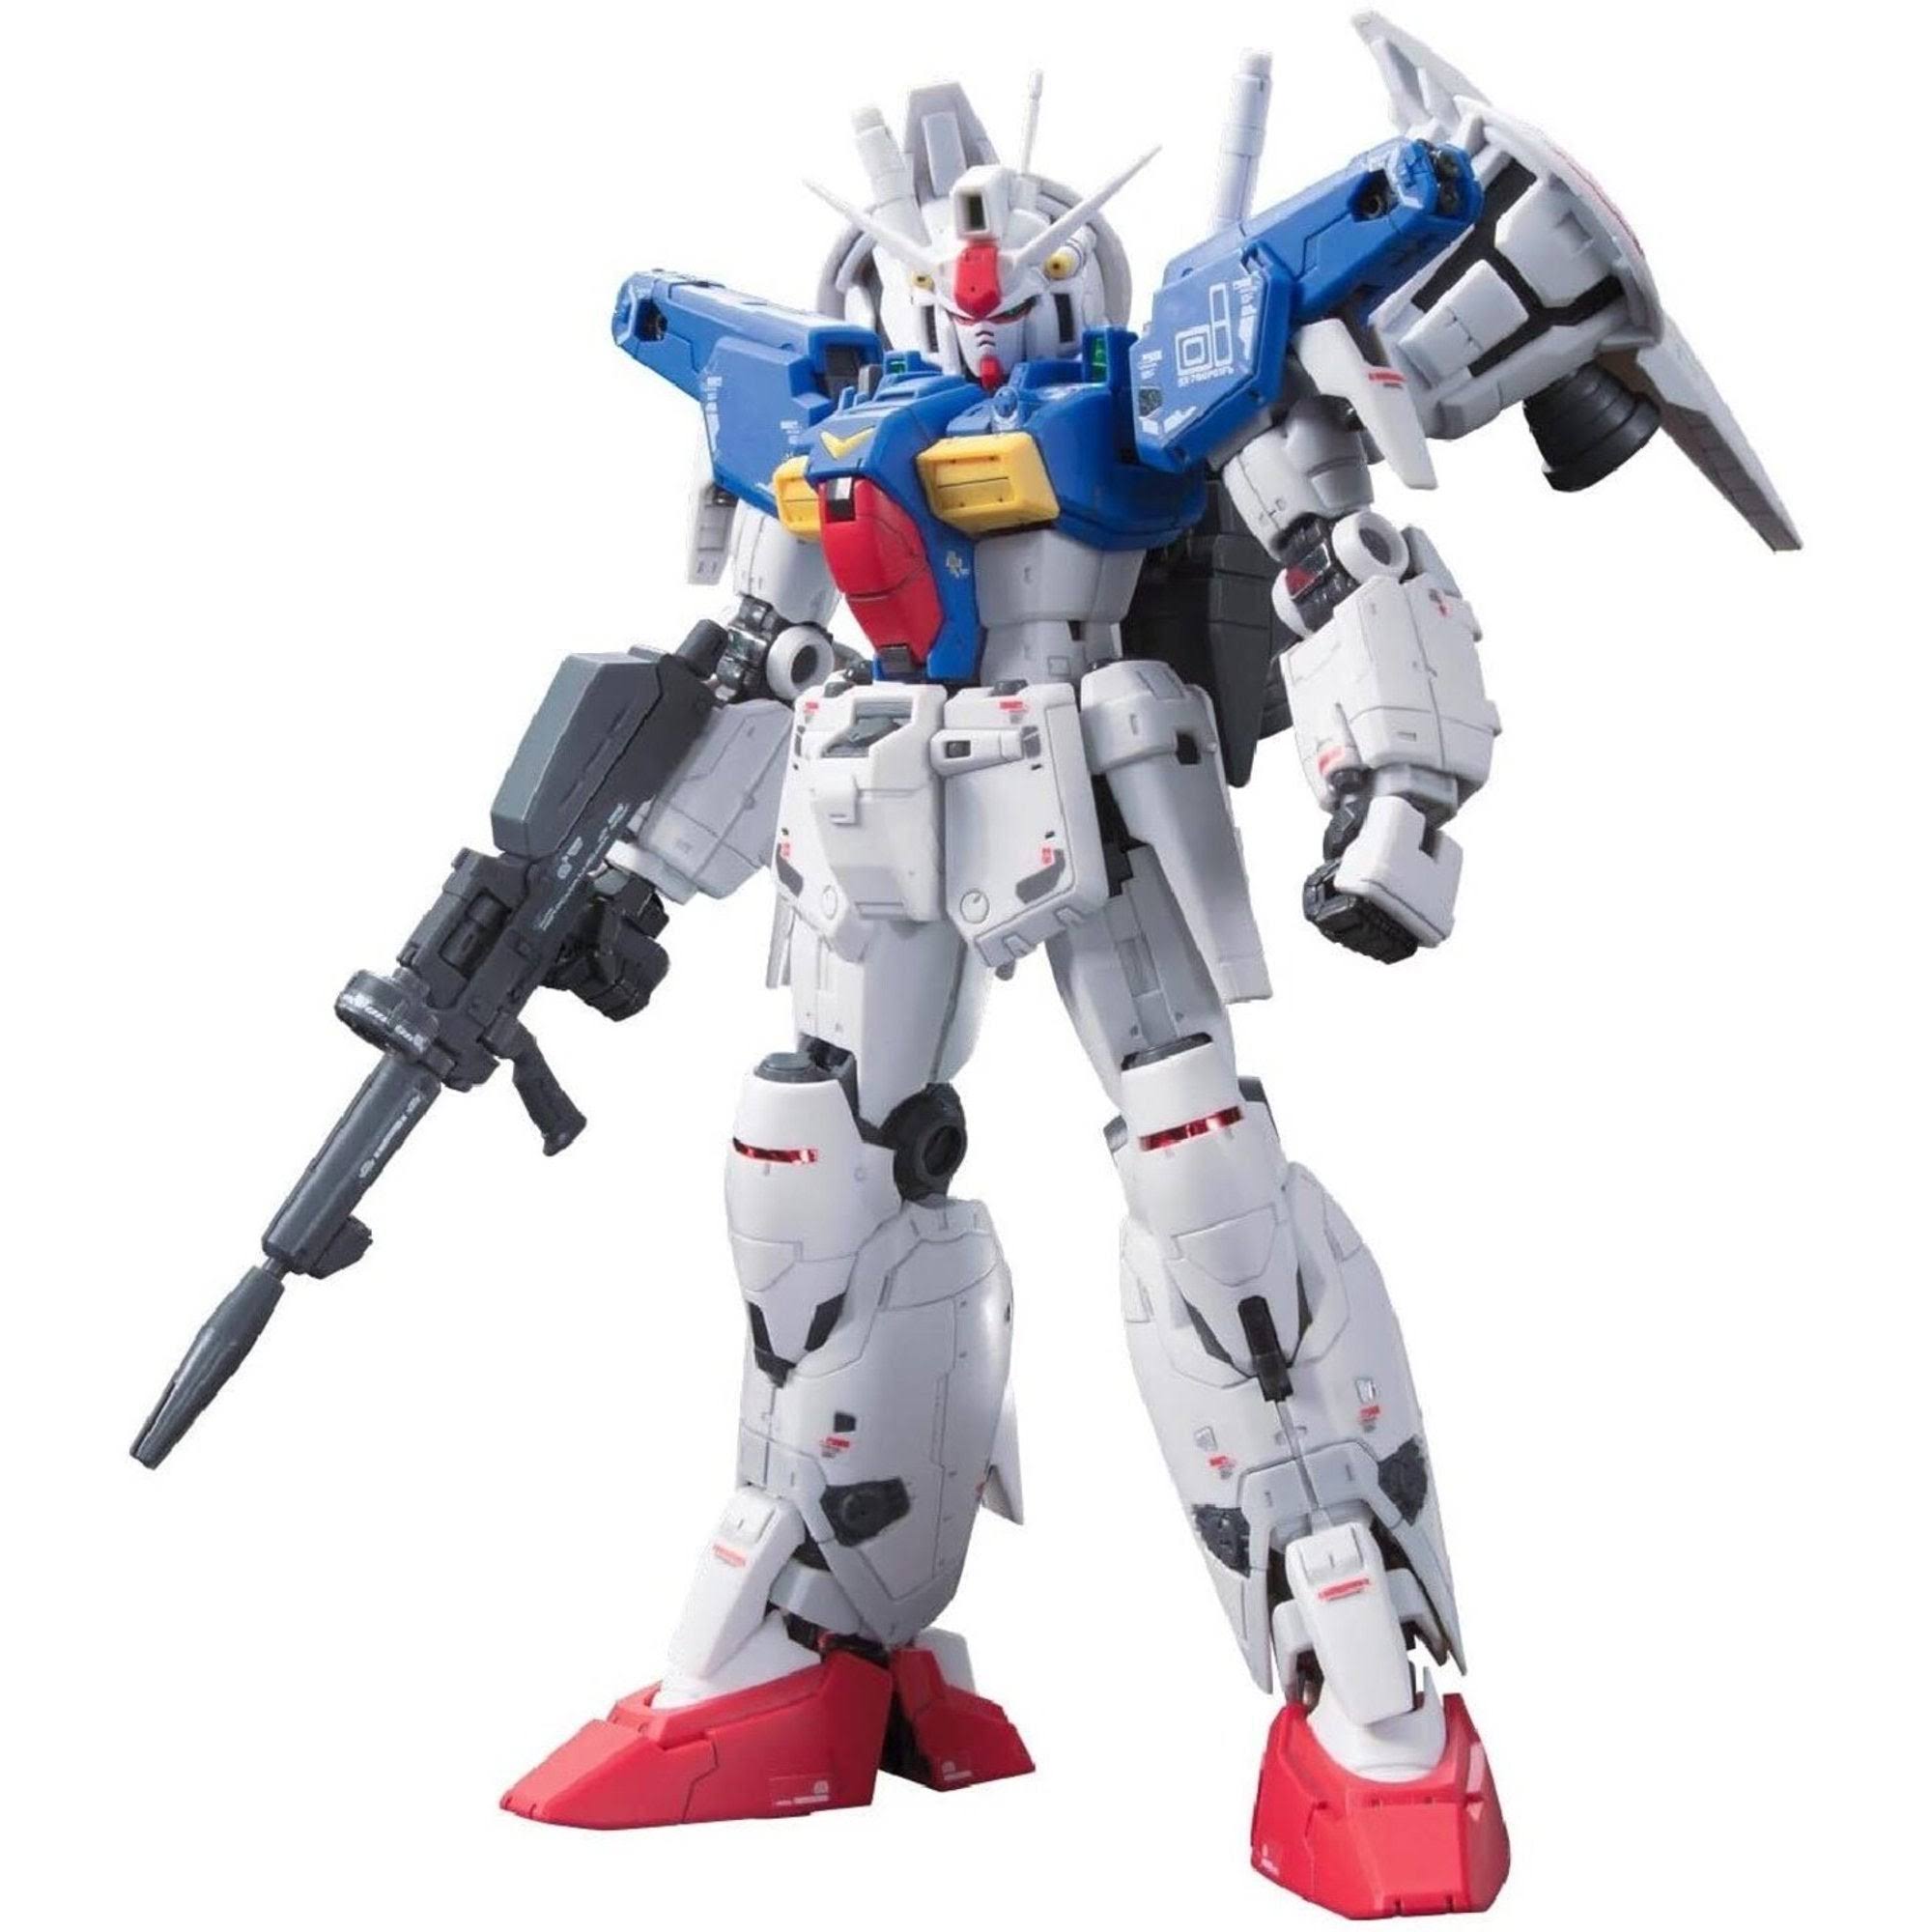 Bandai Hobby Real Gundam Full Burnern Action Figure Model Kit - 1:144 Scale